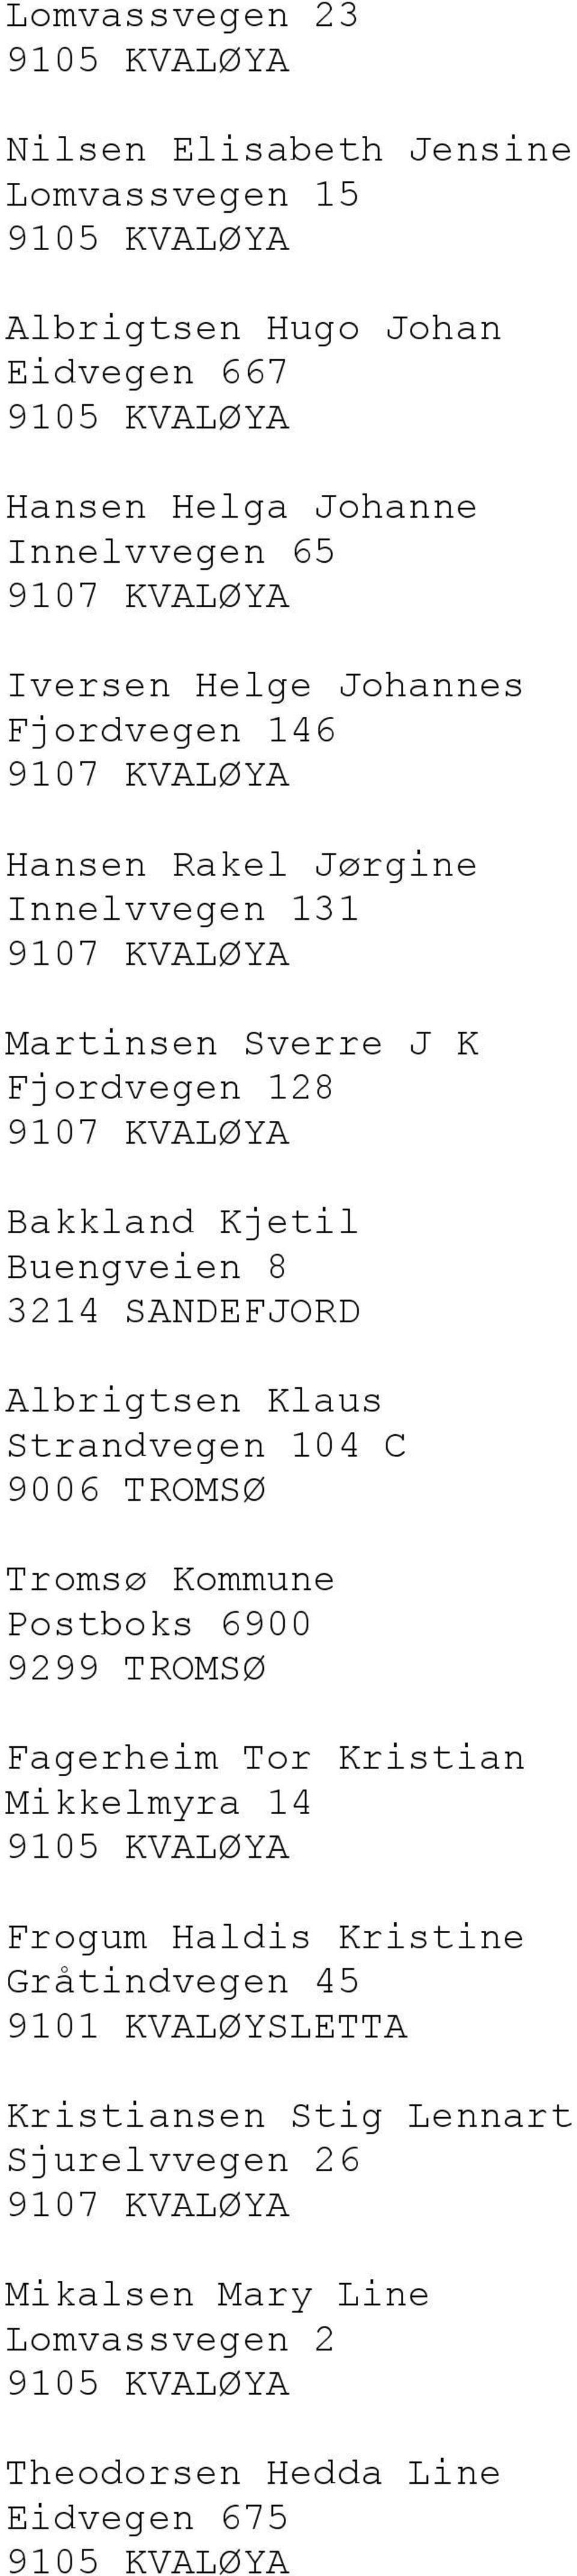 Albrigtsen Klaus Strandvegen 104 C 9006 TROMSØ Tromsø Kommune Postboks 6900 9299 TROMSØ Fagerheim Tor Kristian Mikkelmyra 14 Frogum Haldis